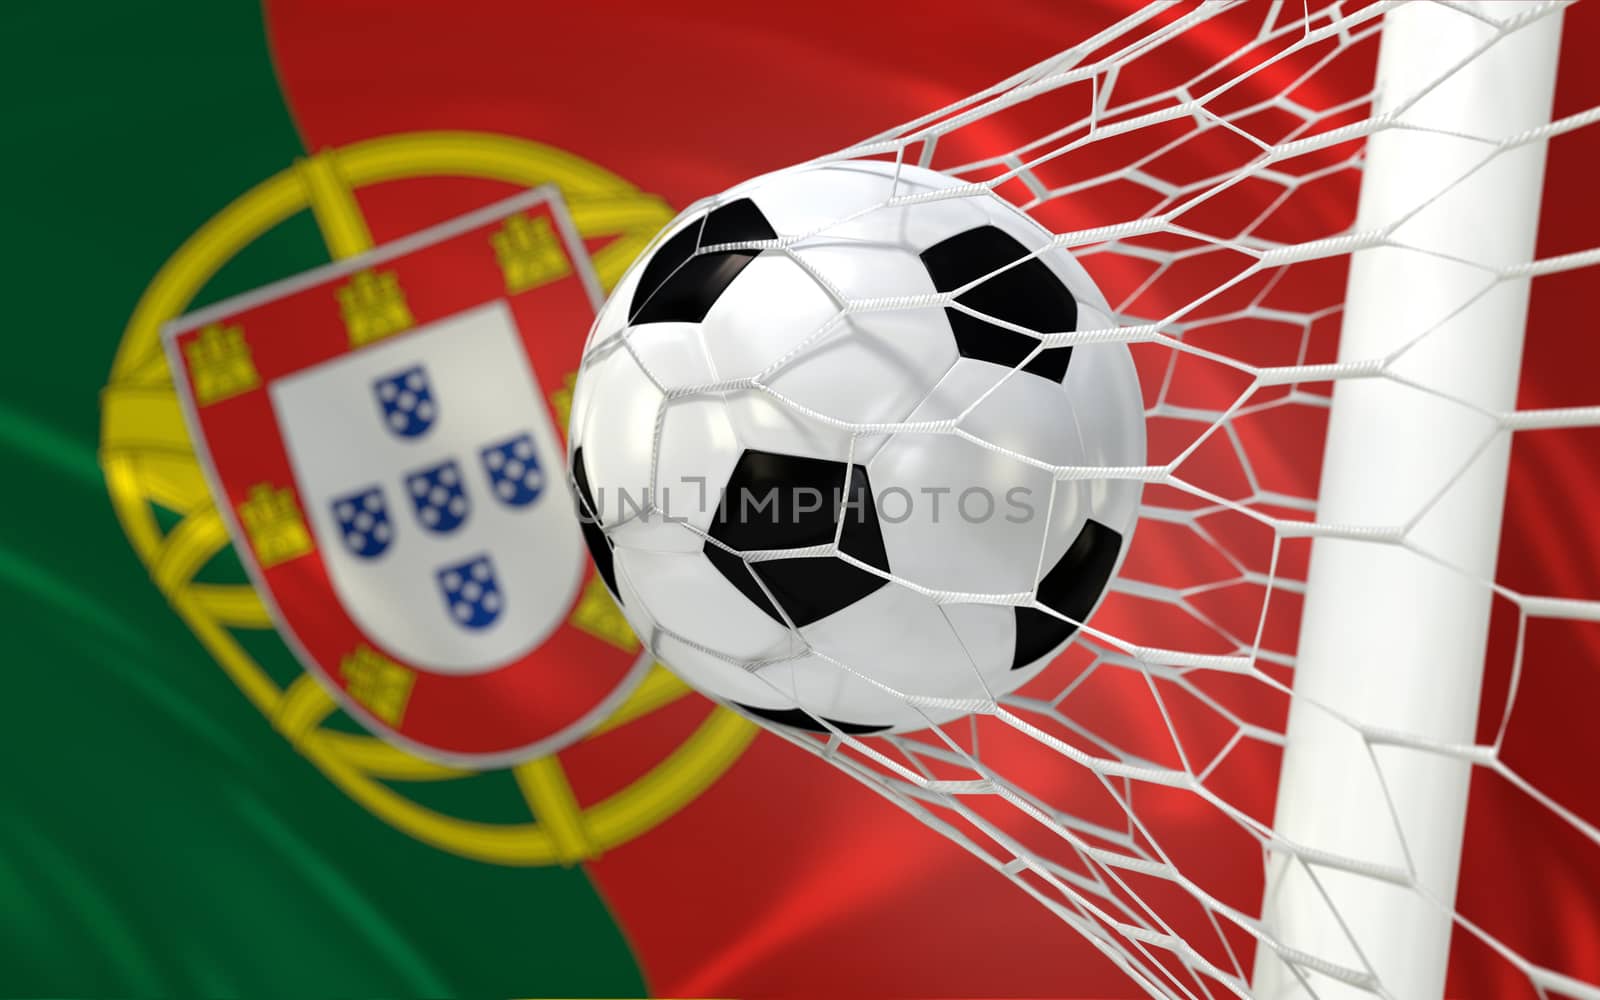 Portugal waving flag and soccer ball in goal net by Barbraford